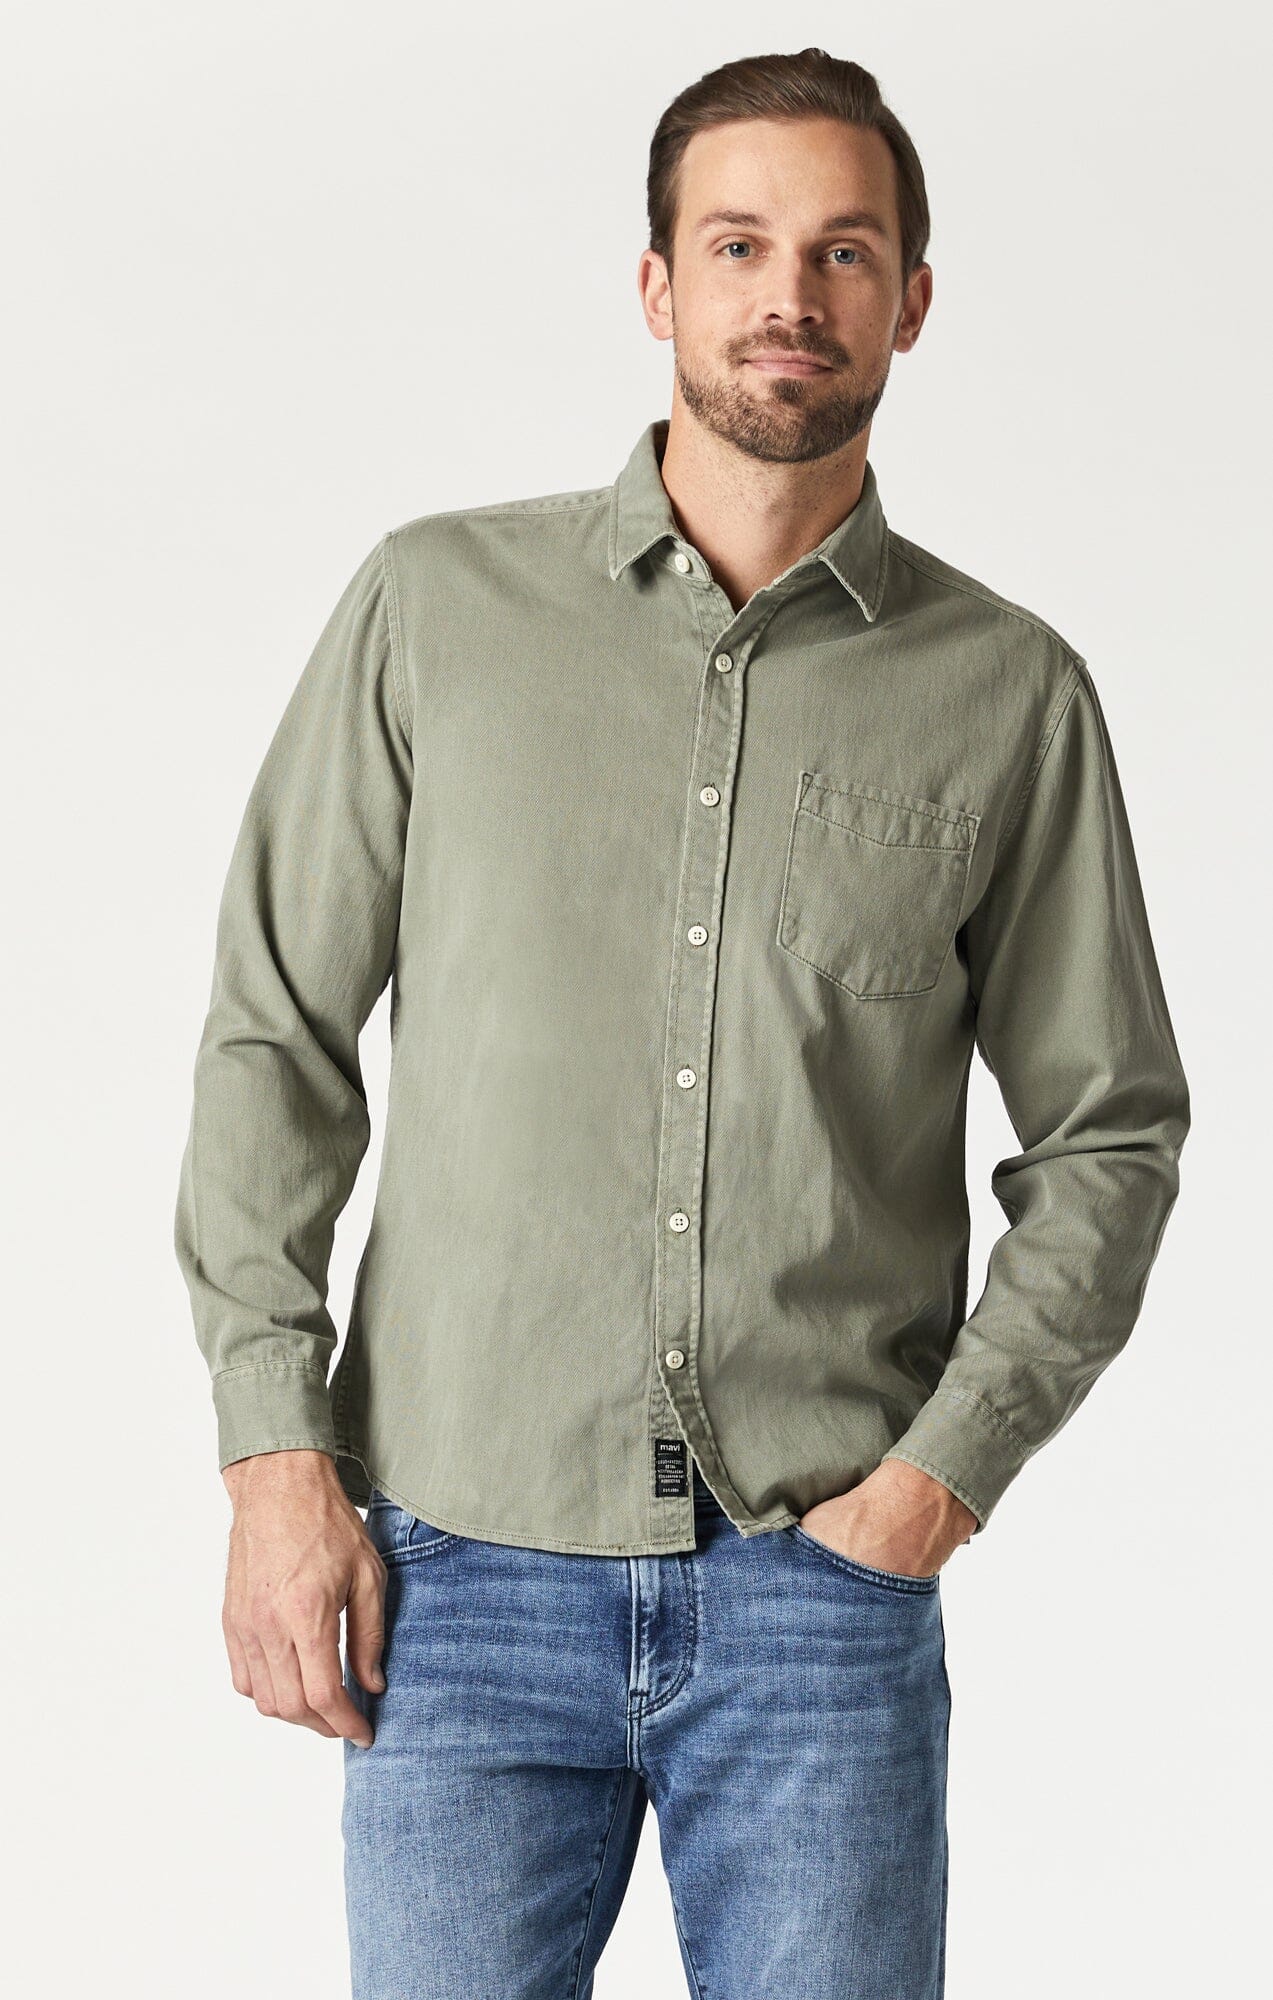 MAVI: Long Sleeve Pocket Button-Down Shirt in Agave Green